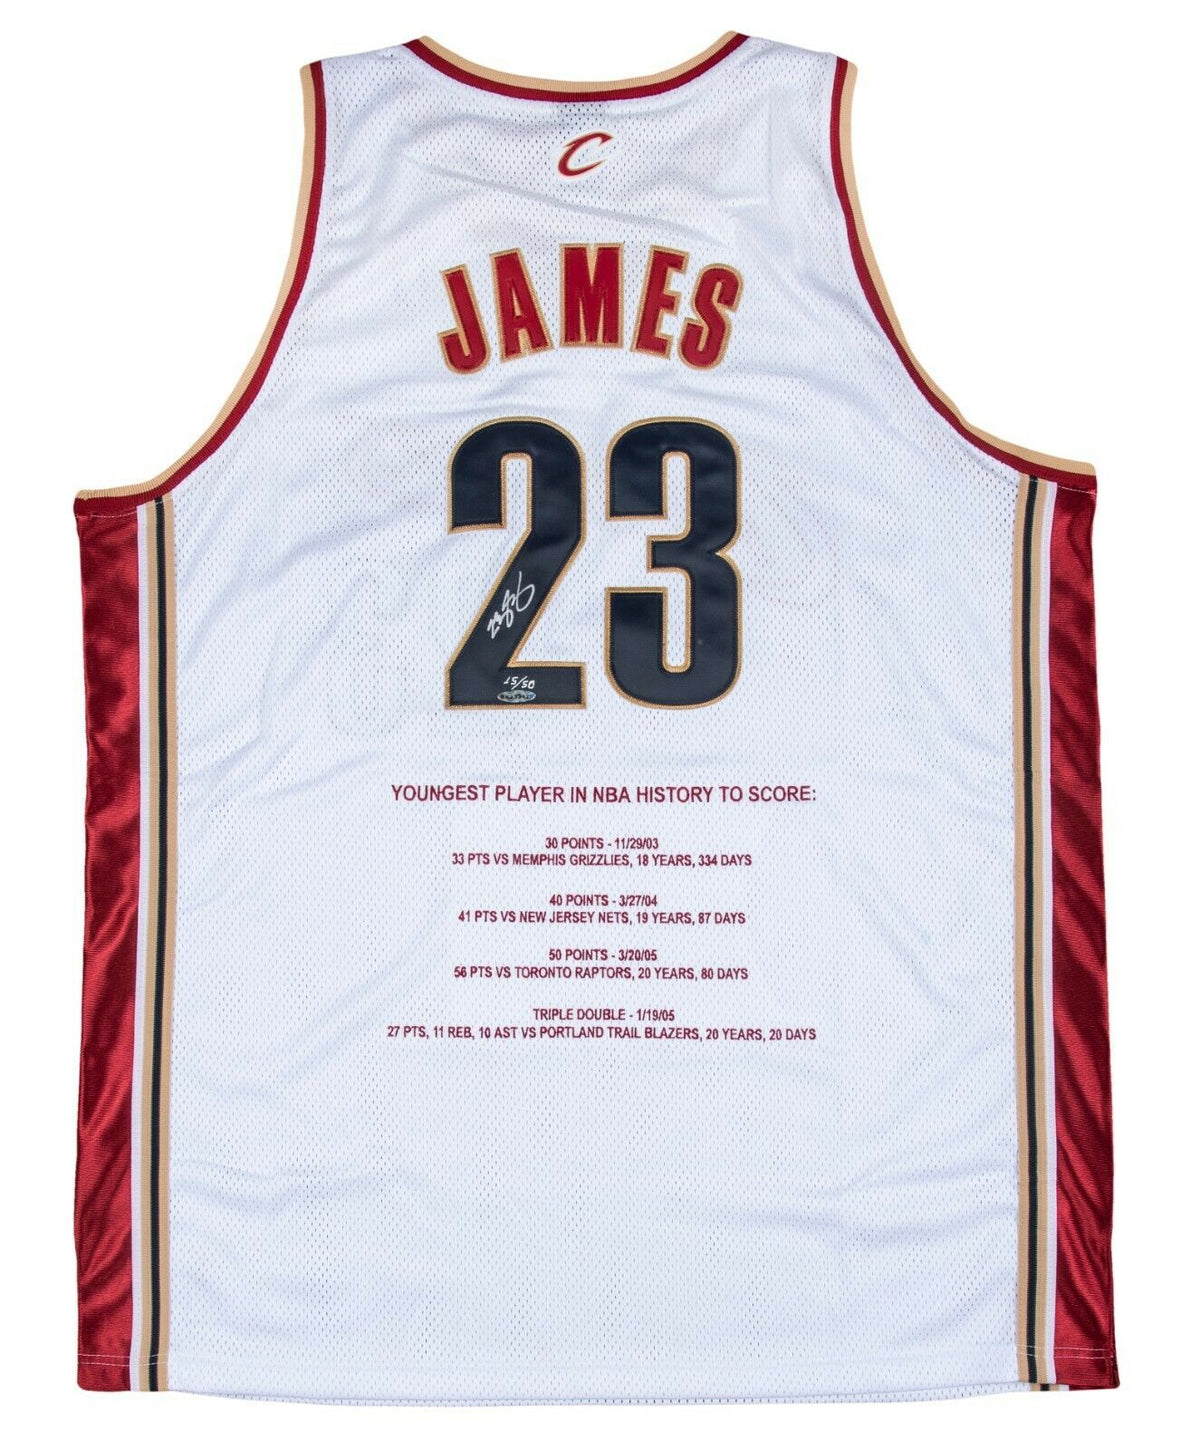 Cleveland sports-memorabilia auction items include LeBron James